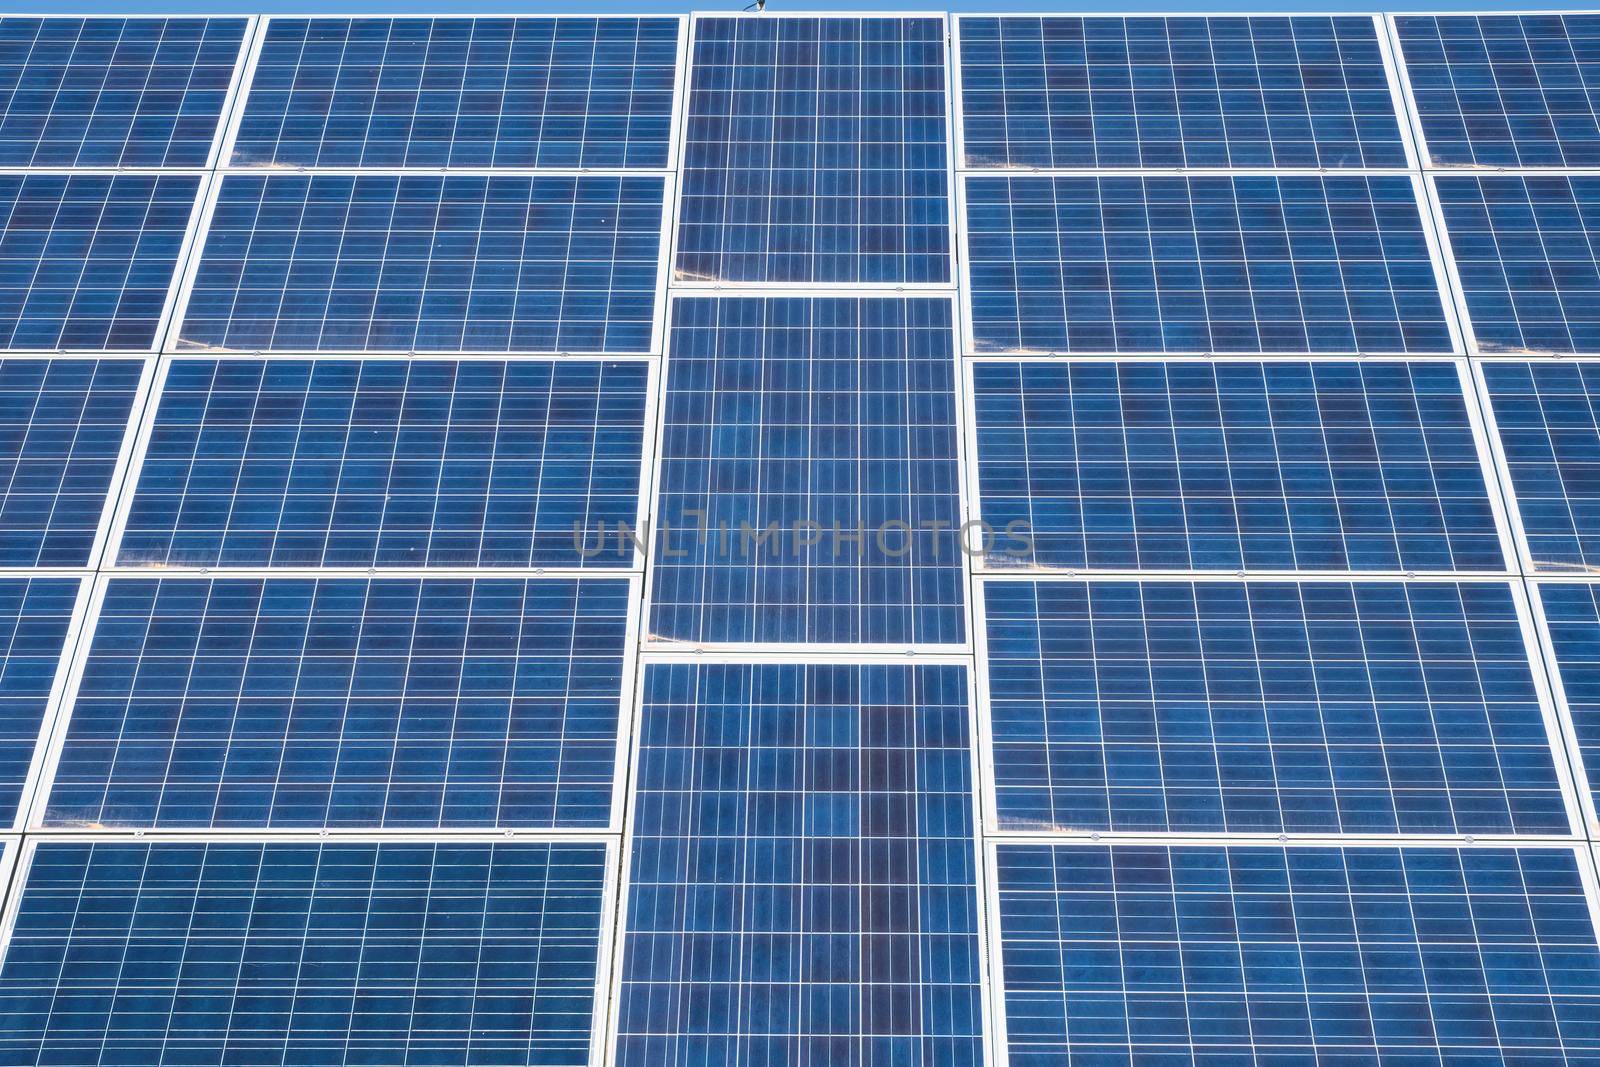 Solar panel, battery renewable energy on sky background by Fischeron